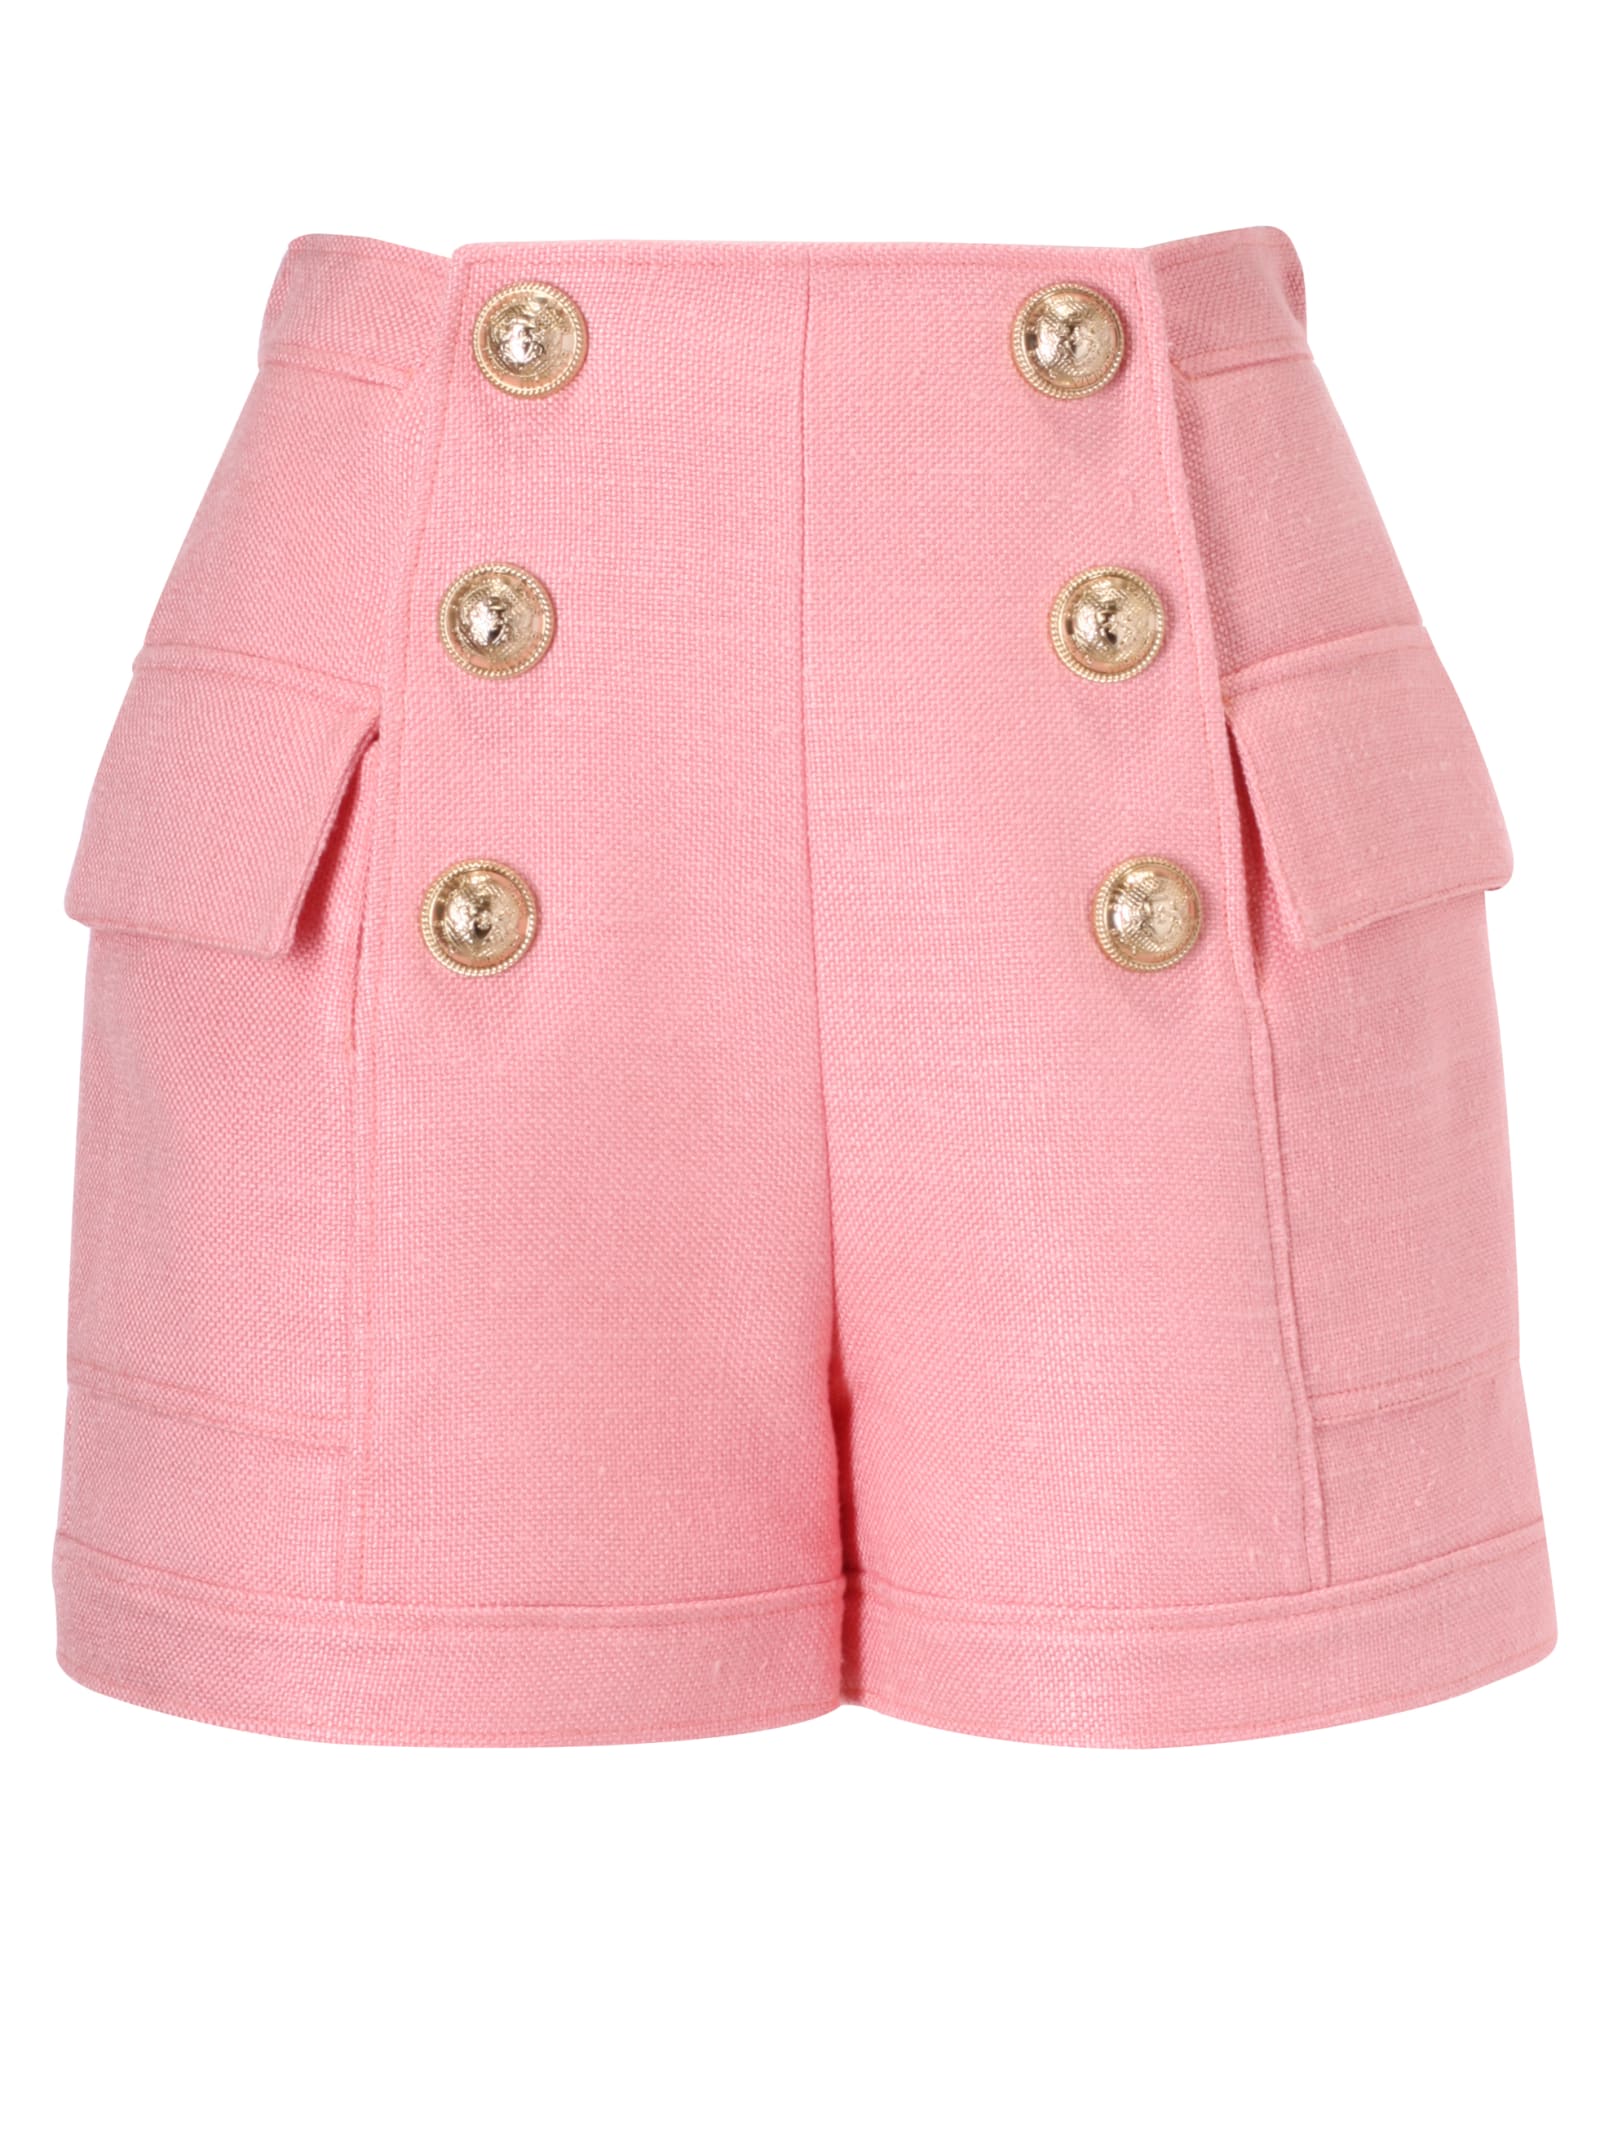 Balmain Button Embellished Shorts In Pale Pink